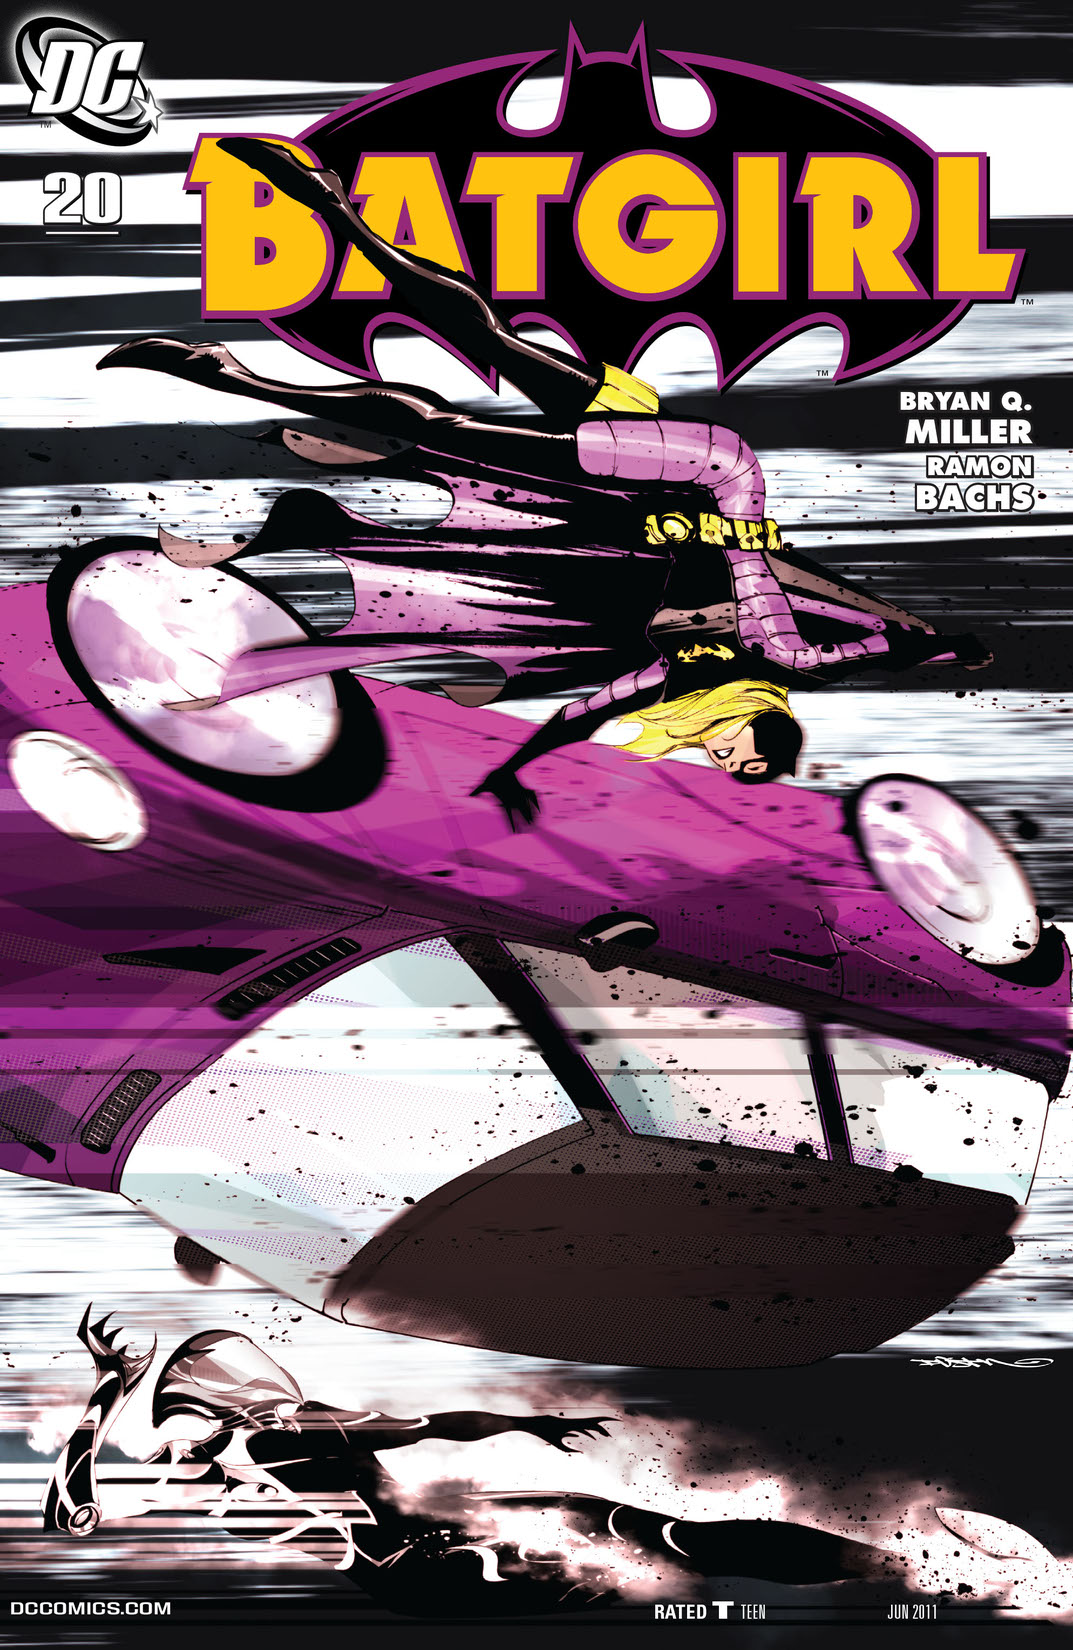 Batgirl (2009-) #20 preview images